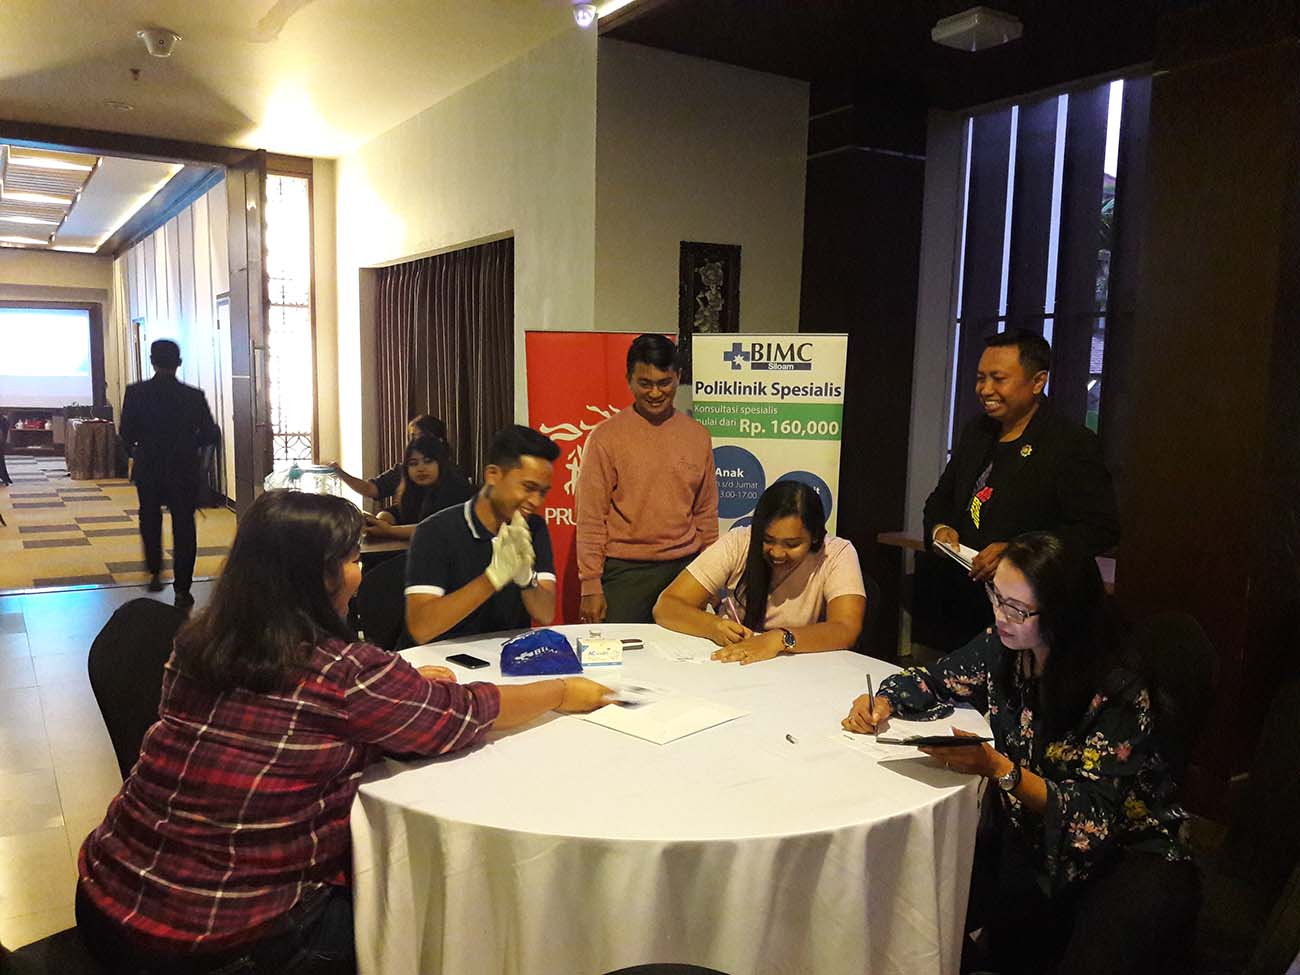 Bimc Siloam Nusa Dua Provide Sample Mcu For Prudential Clients Gatherings